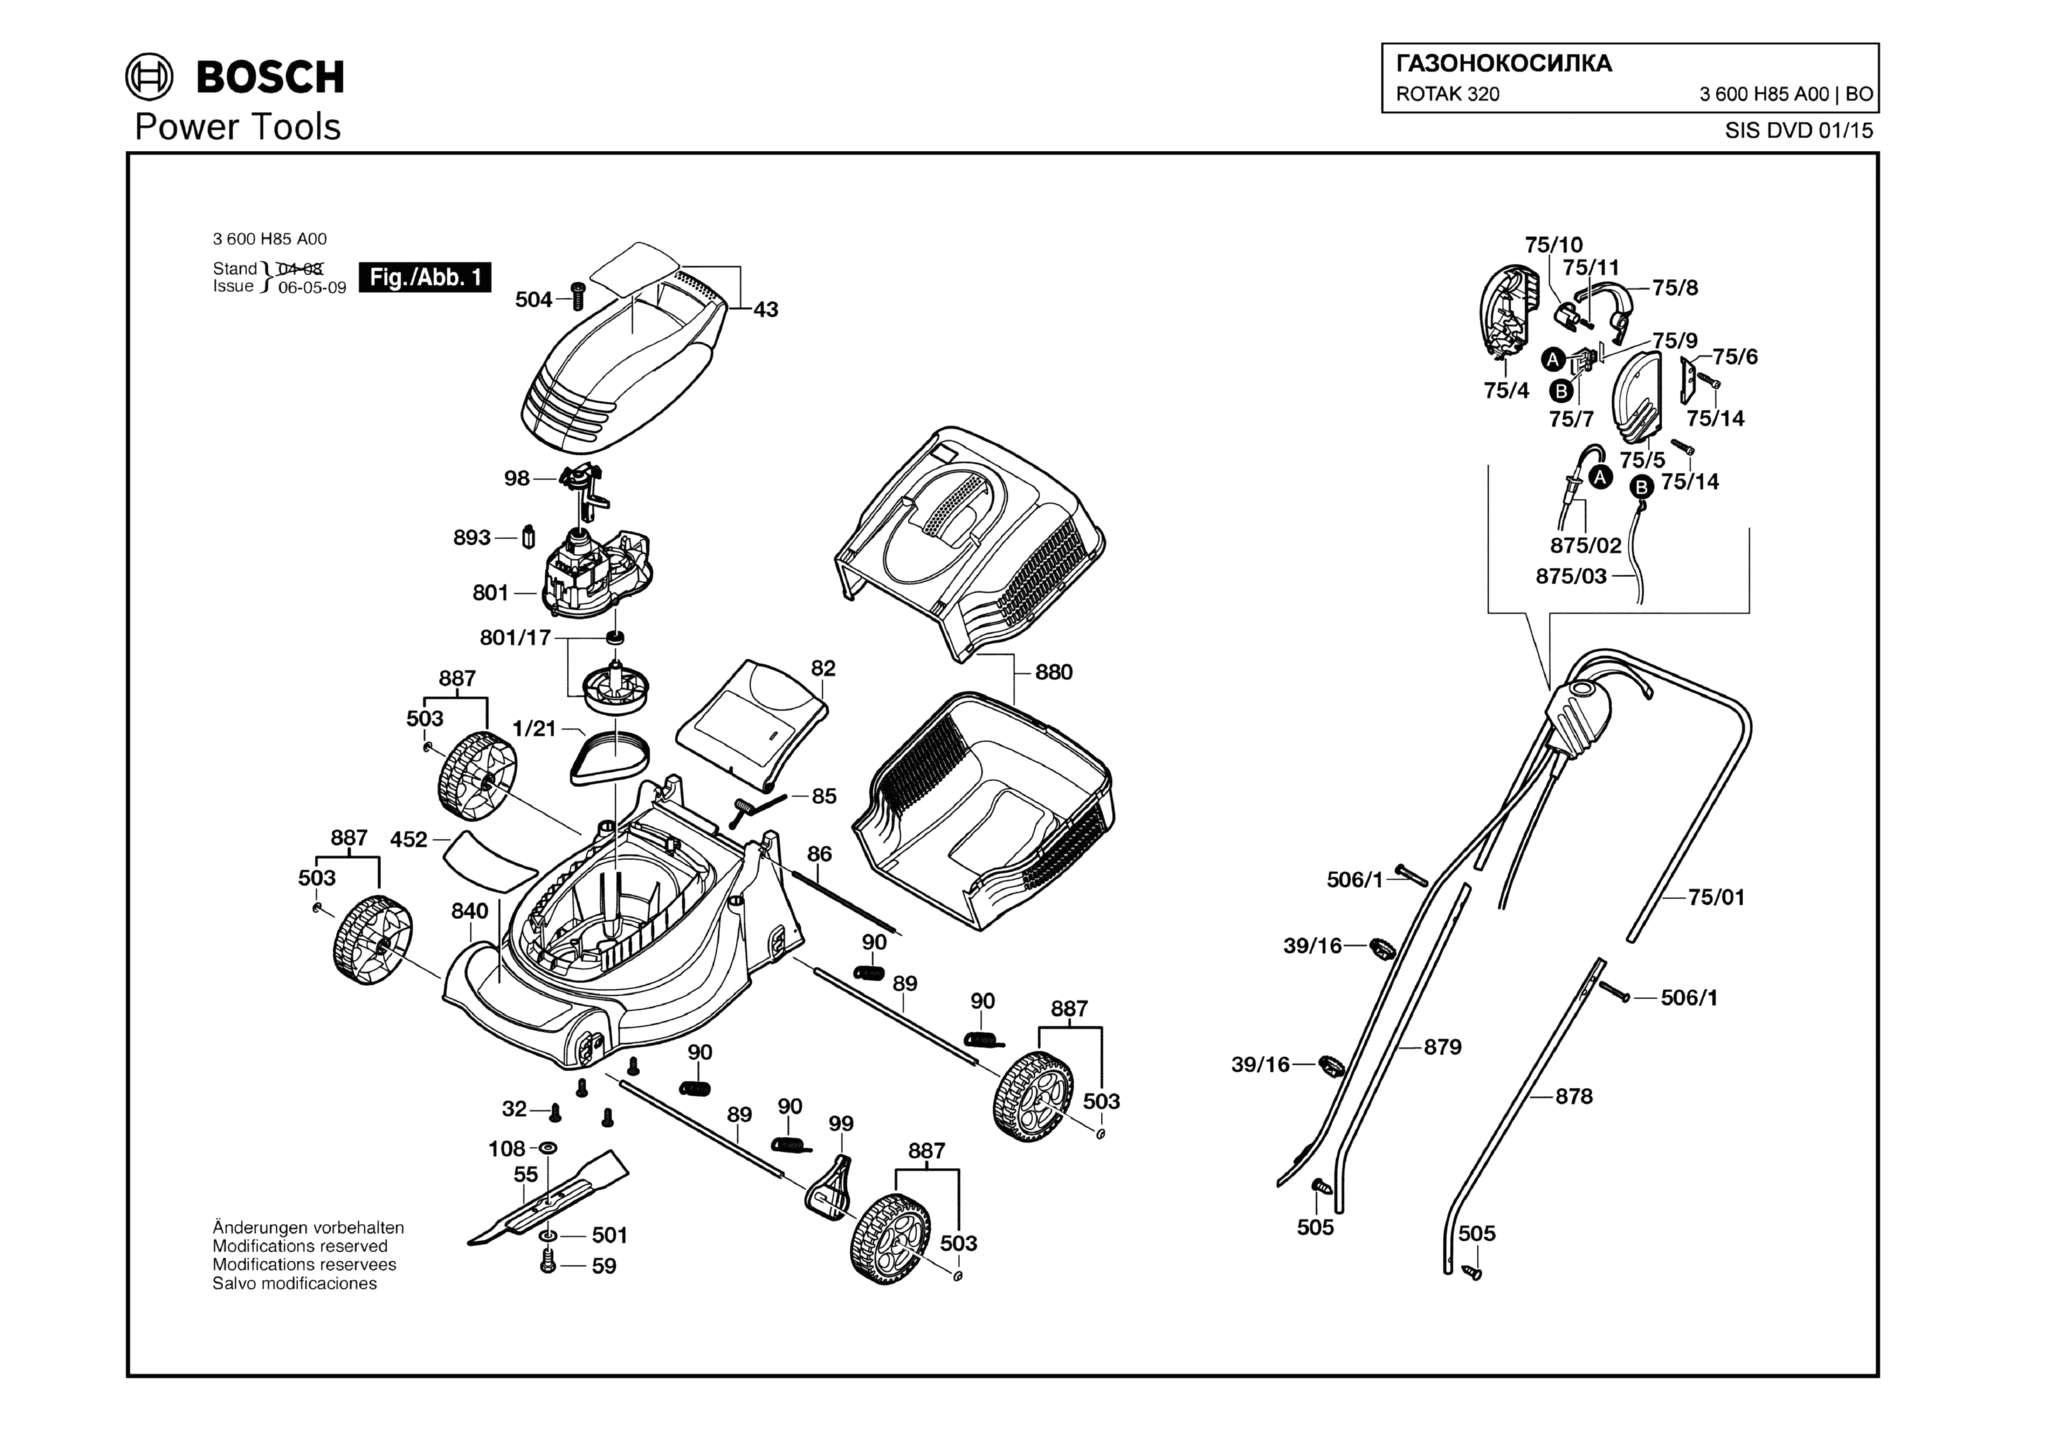 Запчасти, схема и деталировка Bosch ROTAK 320 (ТИП 3600H85A00)